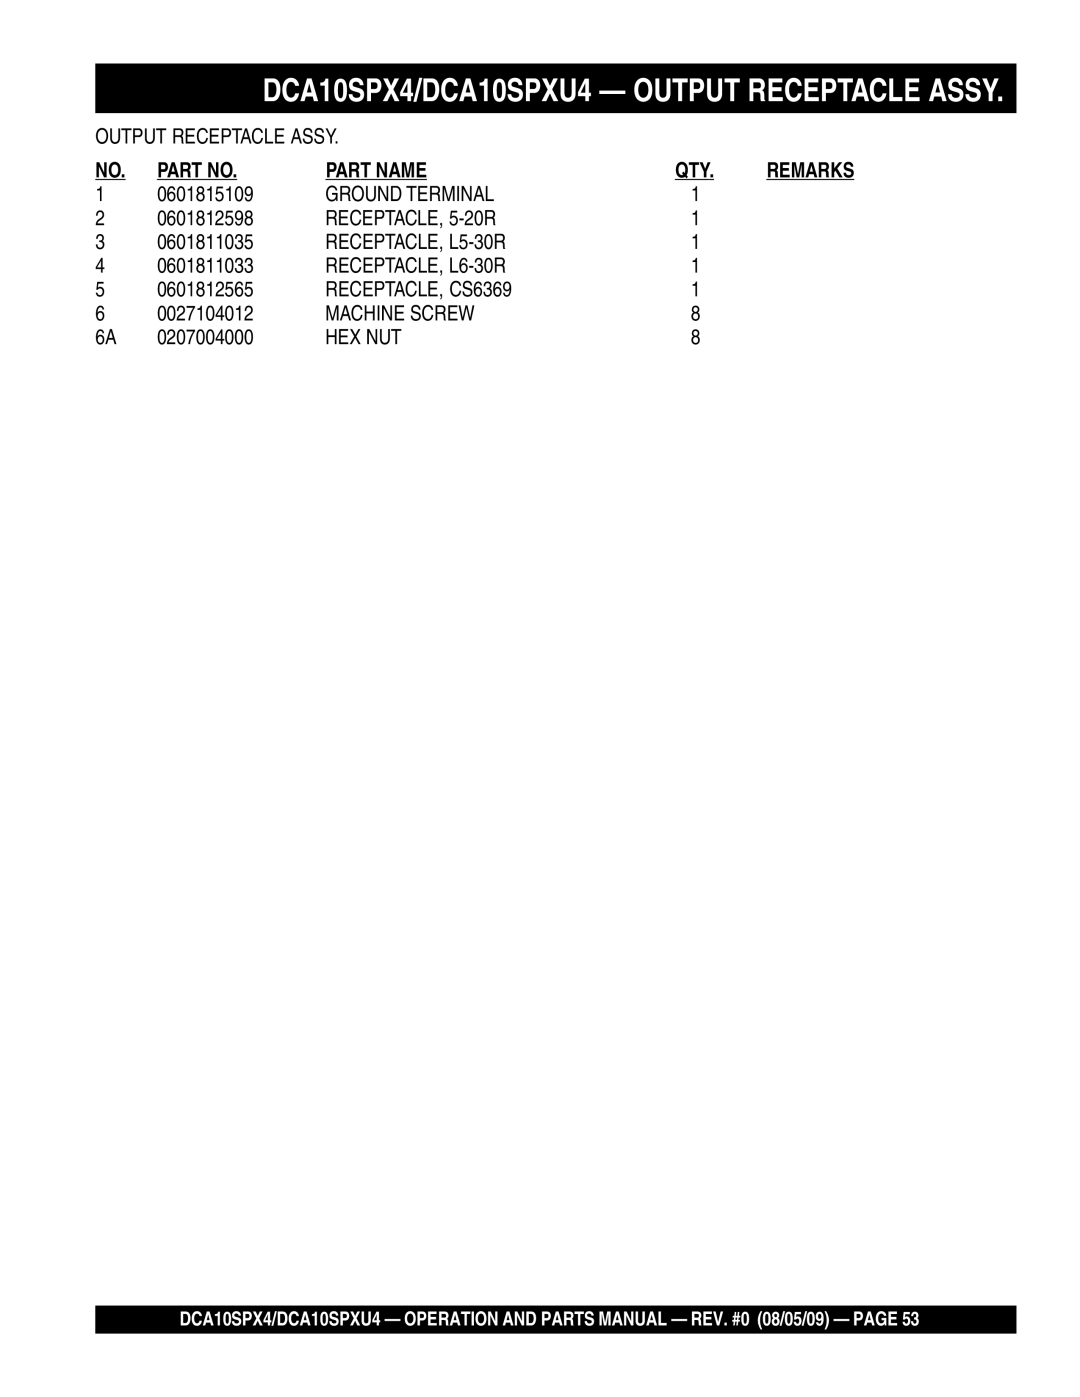 Multiquip operation manual DCA10SPX4/DCA10SPXU4 - OUTPUT RECEPTACLE ASSY, Part Name 